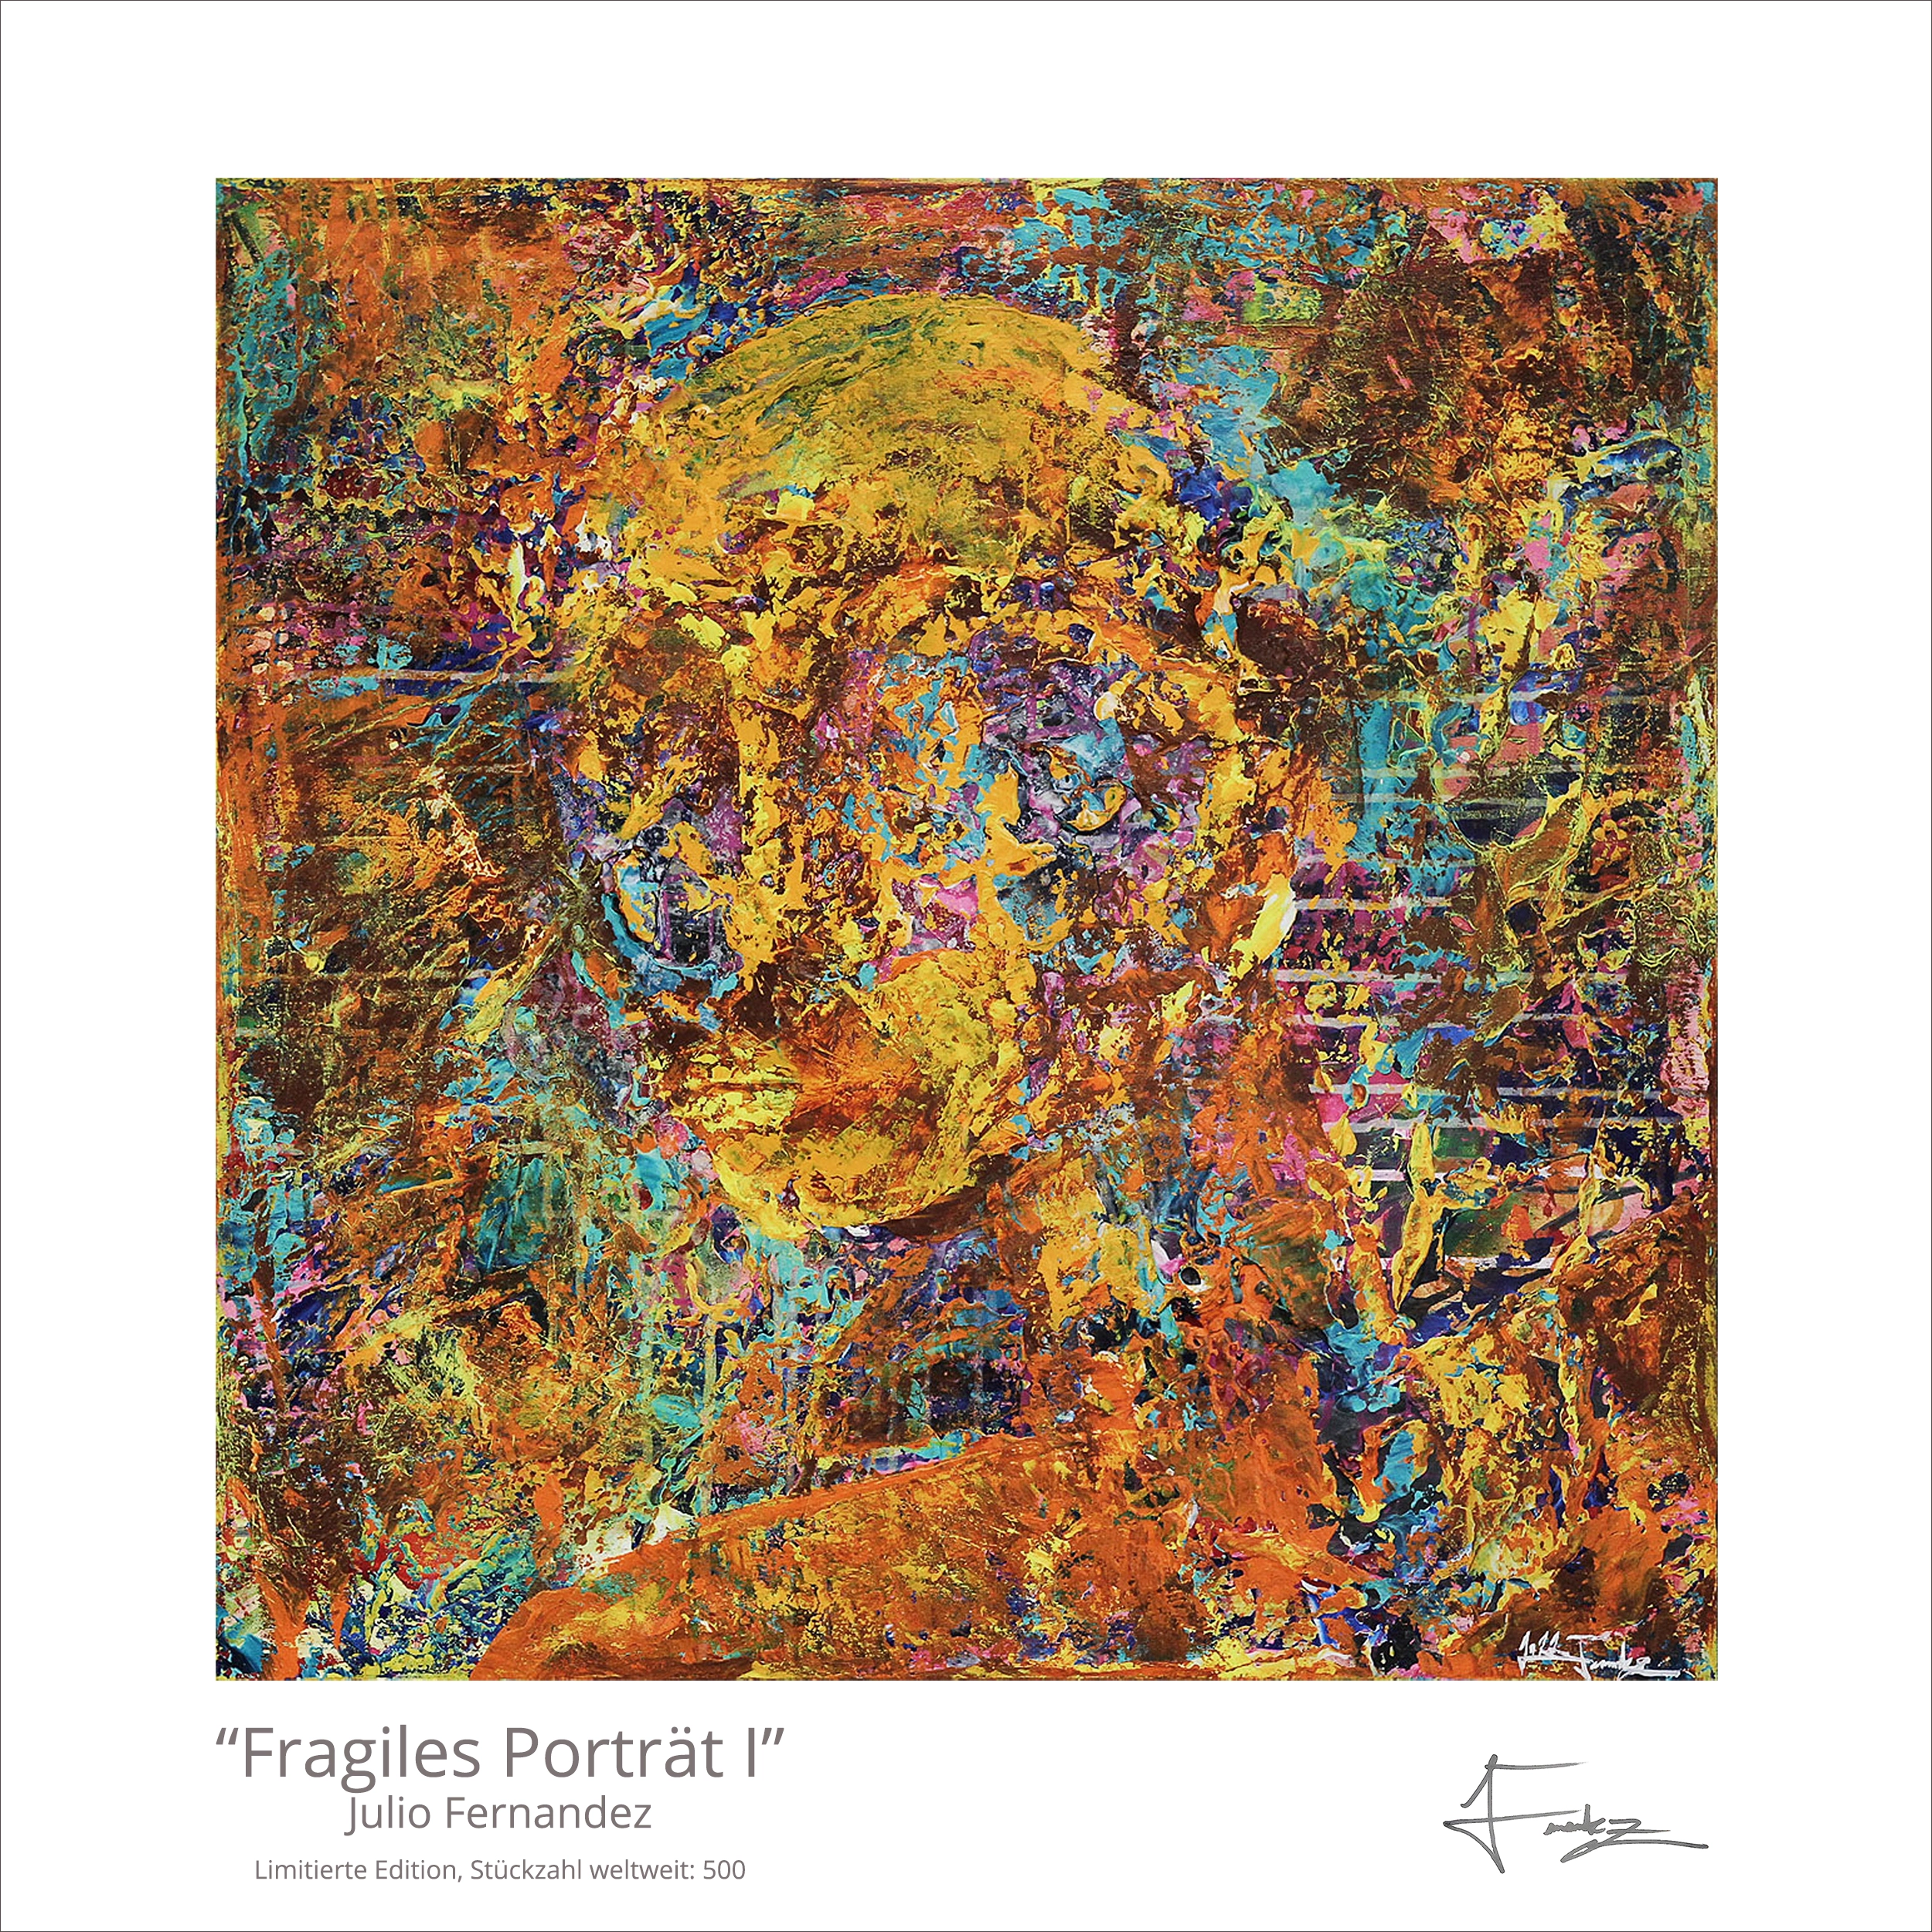 Limitierte Edition auf Papier, J. Fernandez "Fragiles Porträt I", Fineartprint